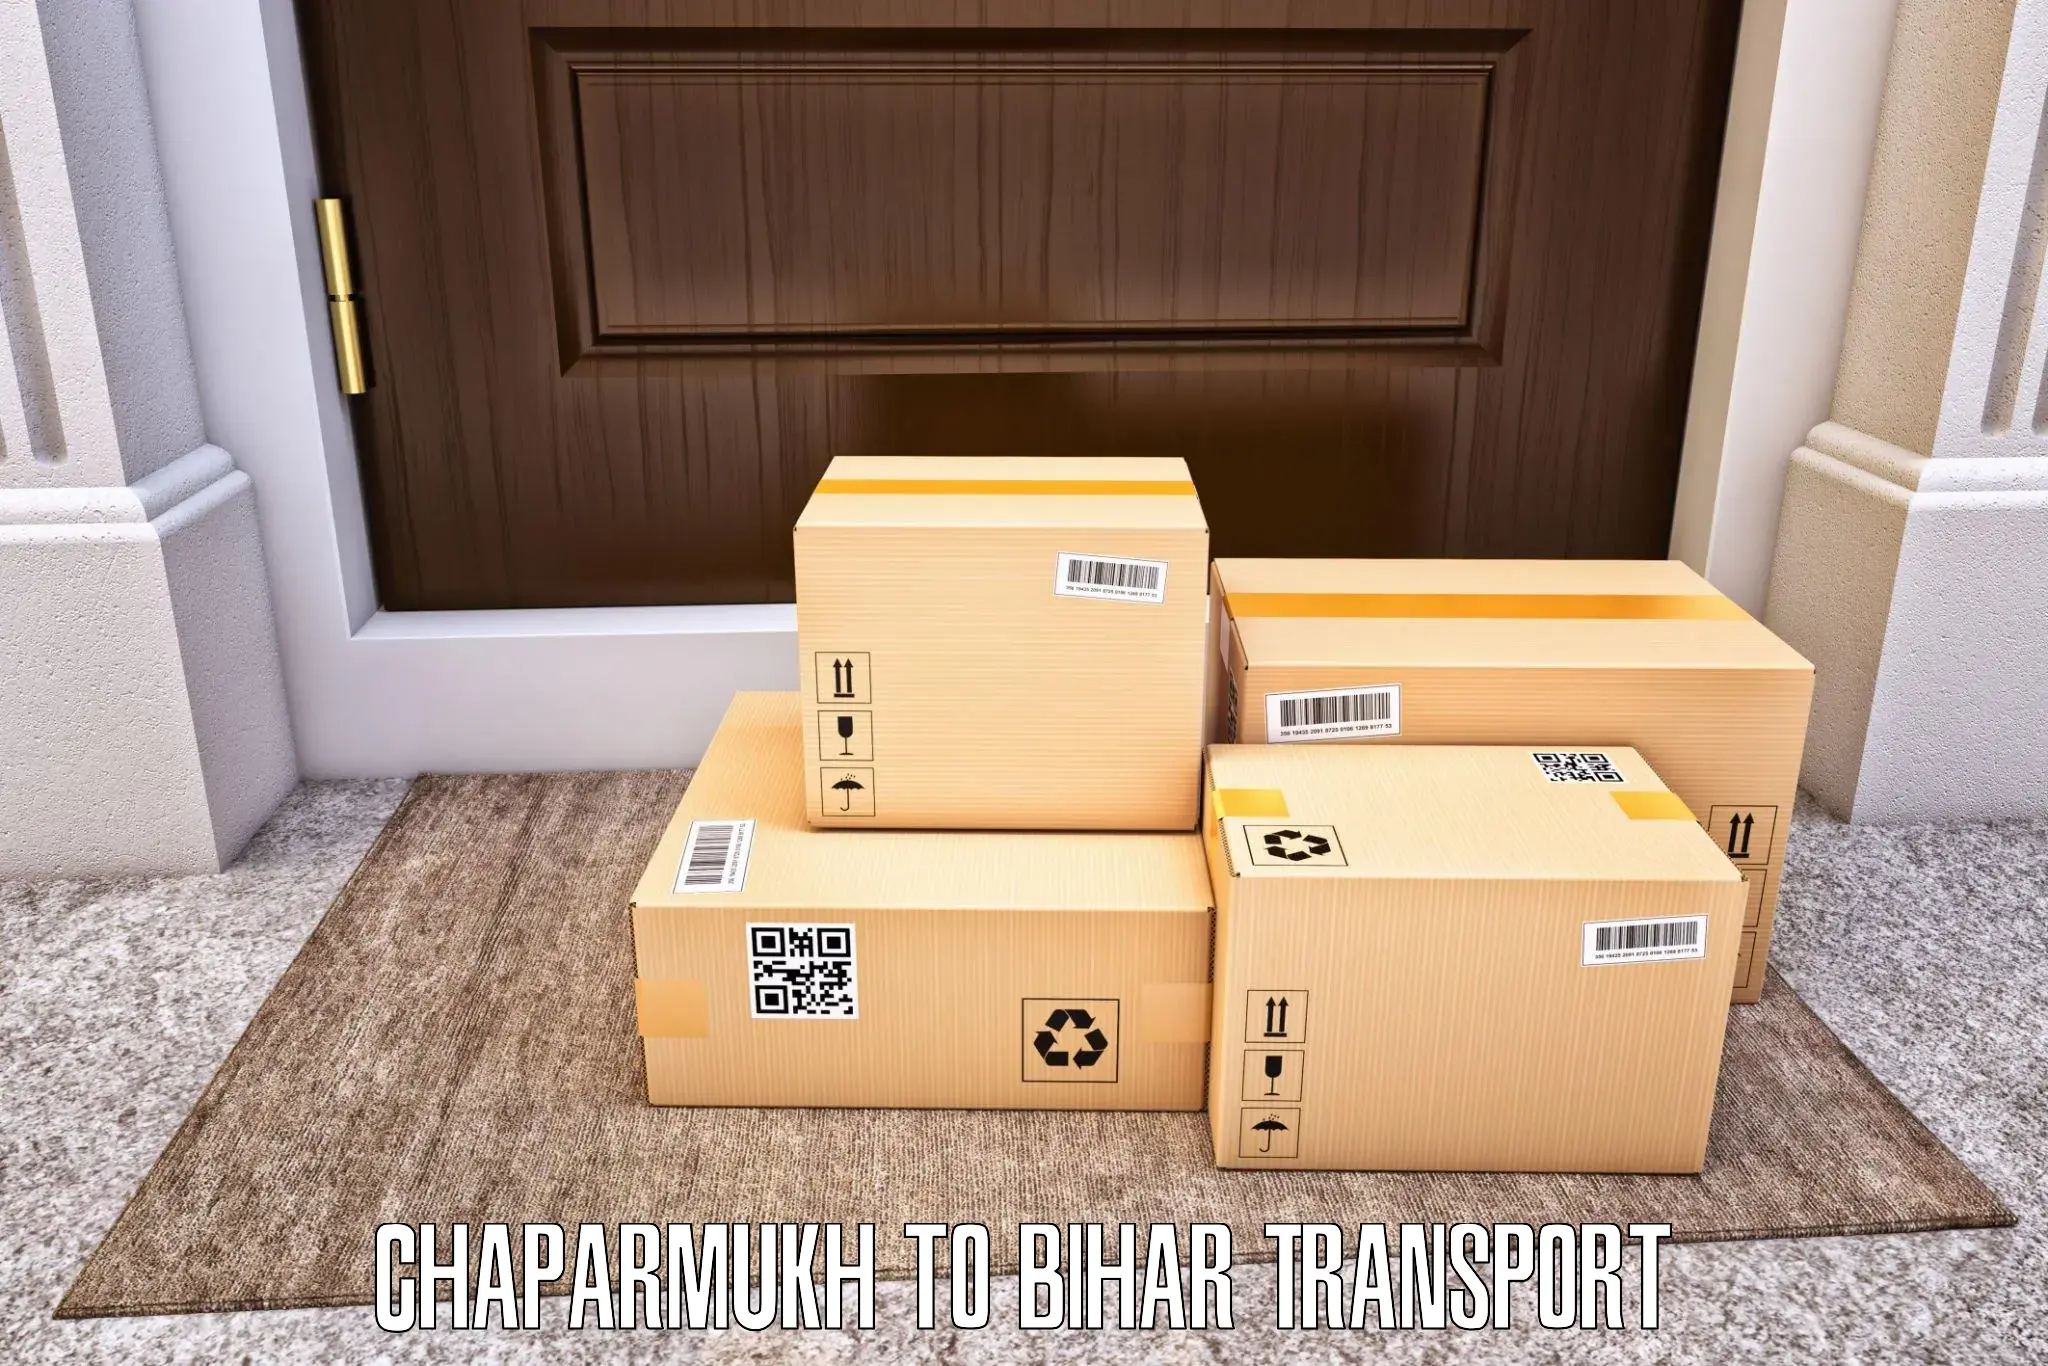 Pick up transport service Chaparmukh to Ekma